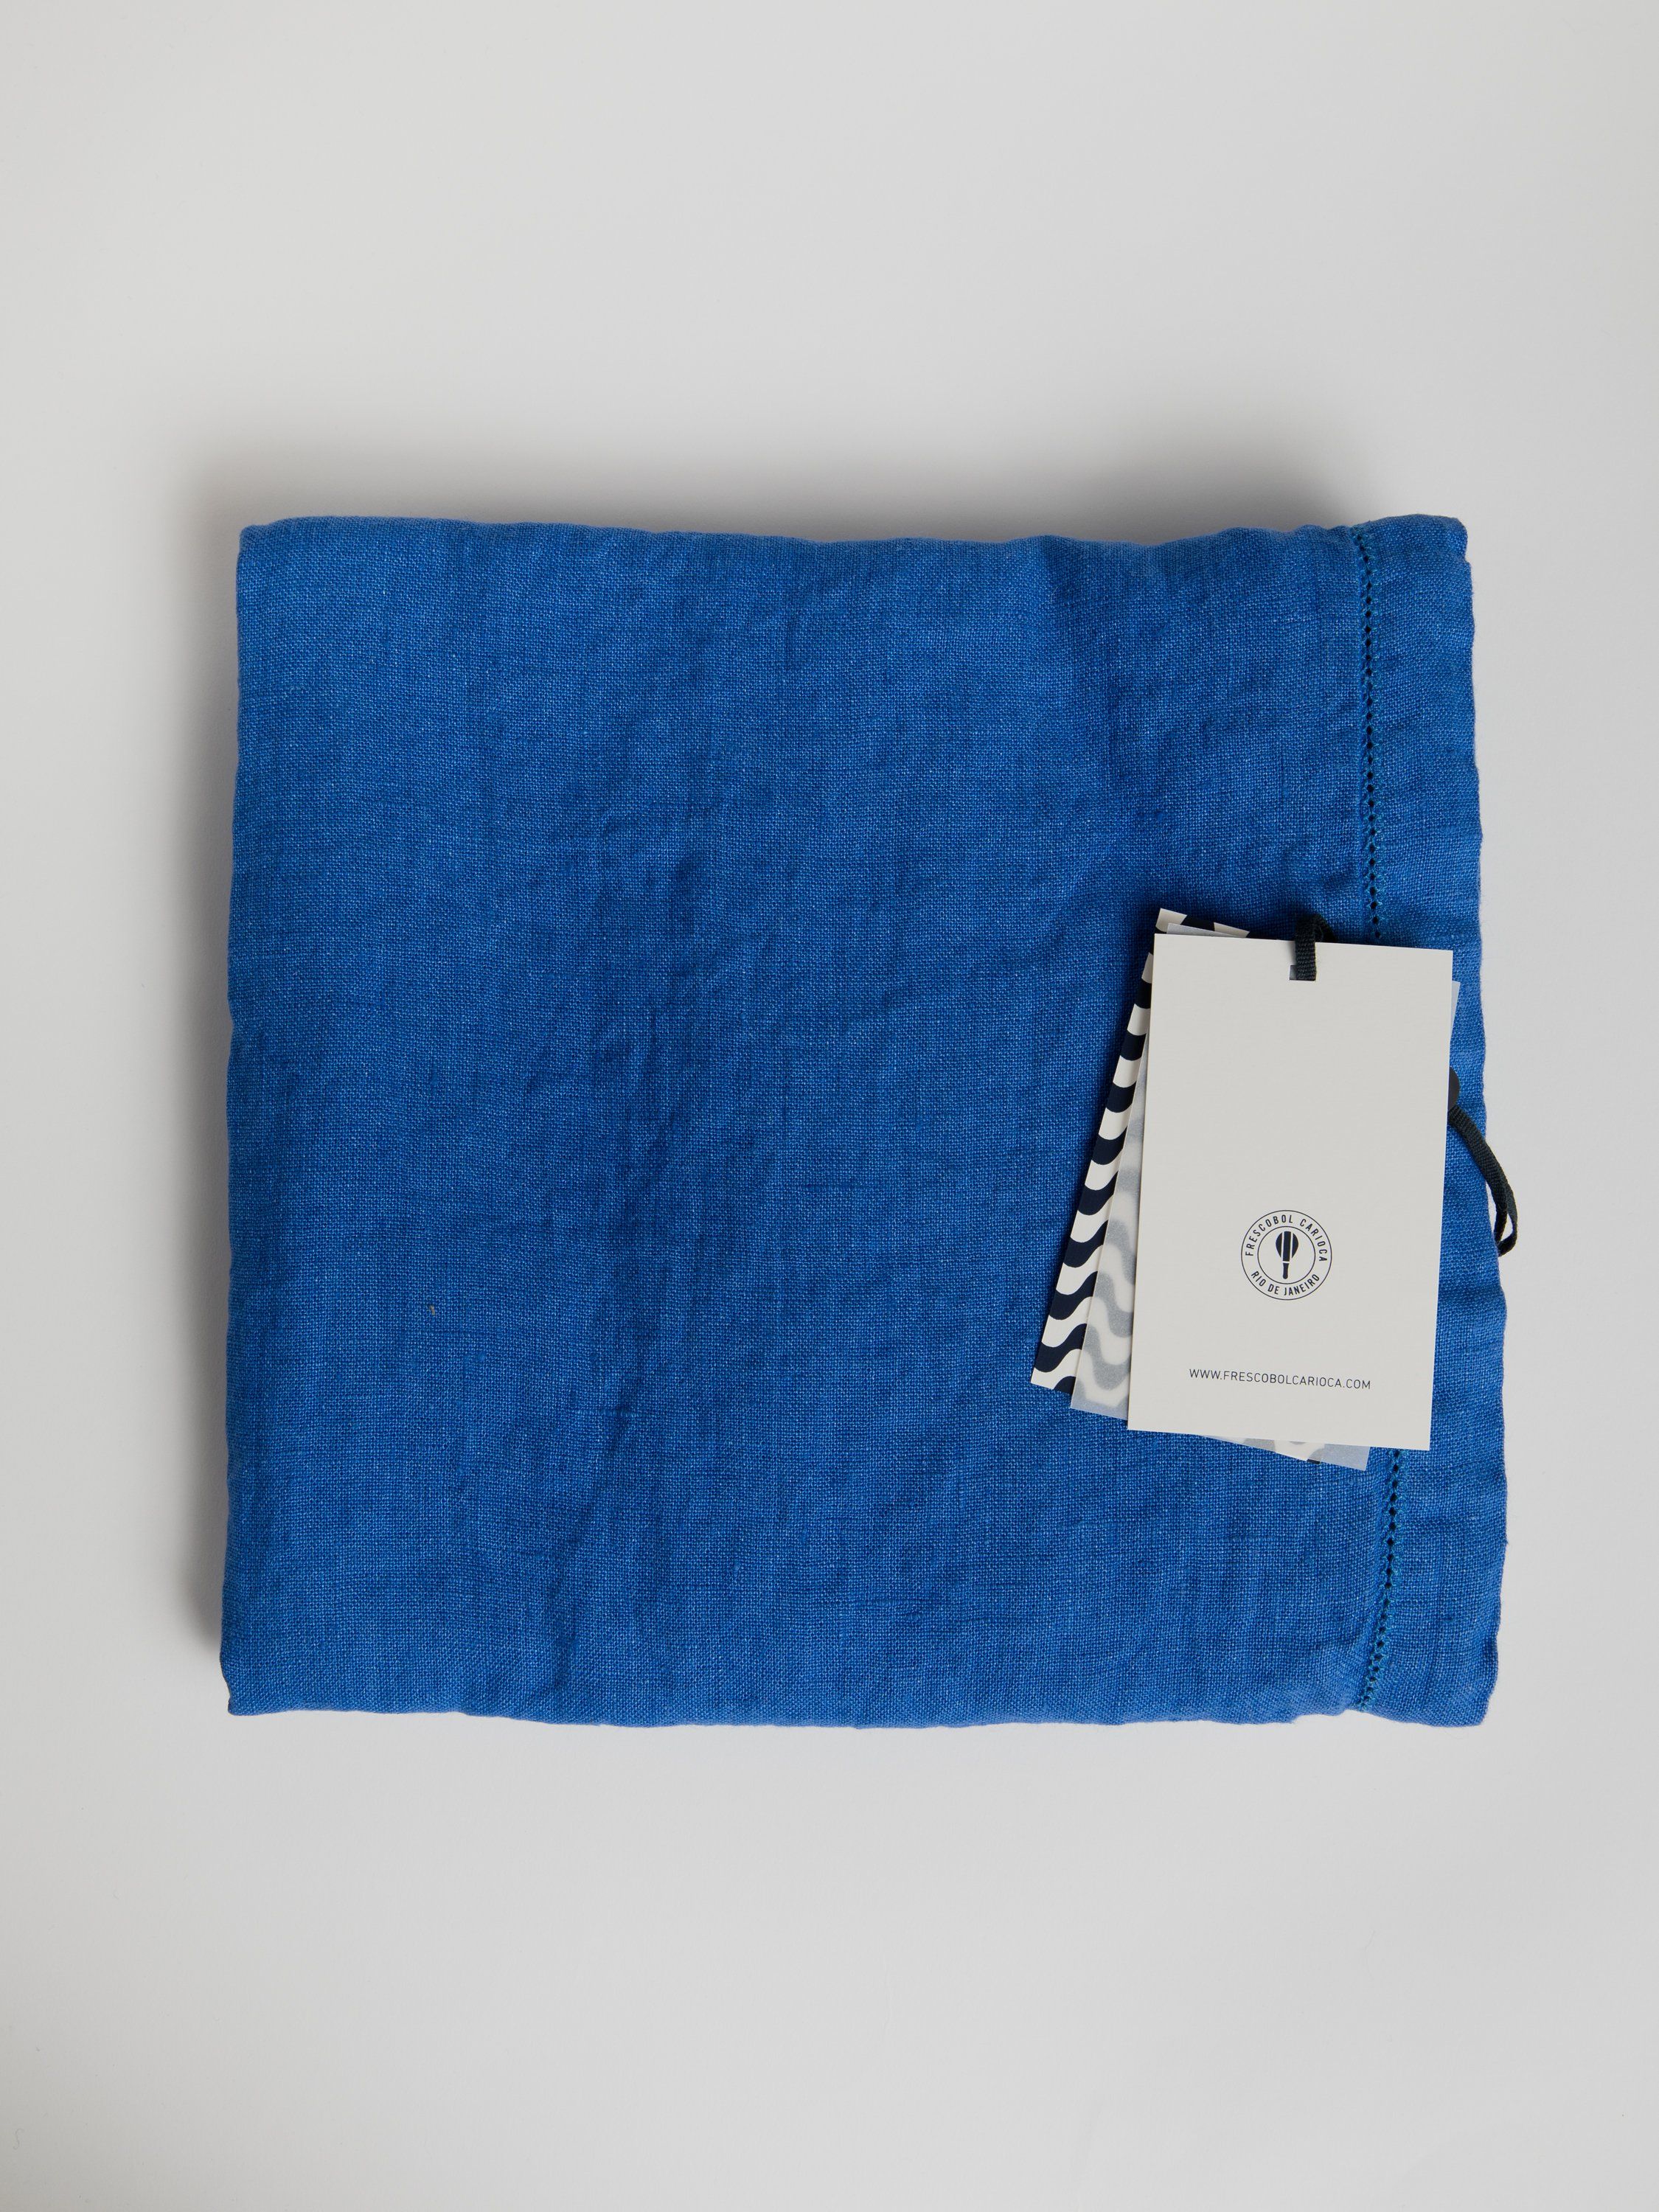 Linen Beach Towel - Slate Blue Towel Frescobol Carioca 